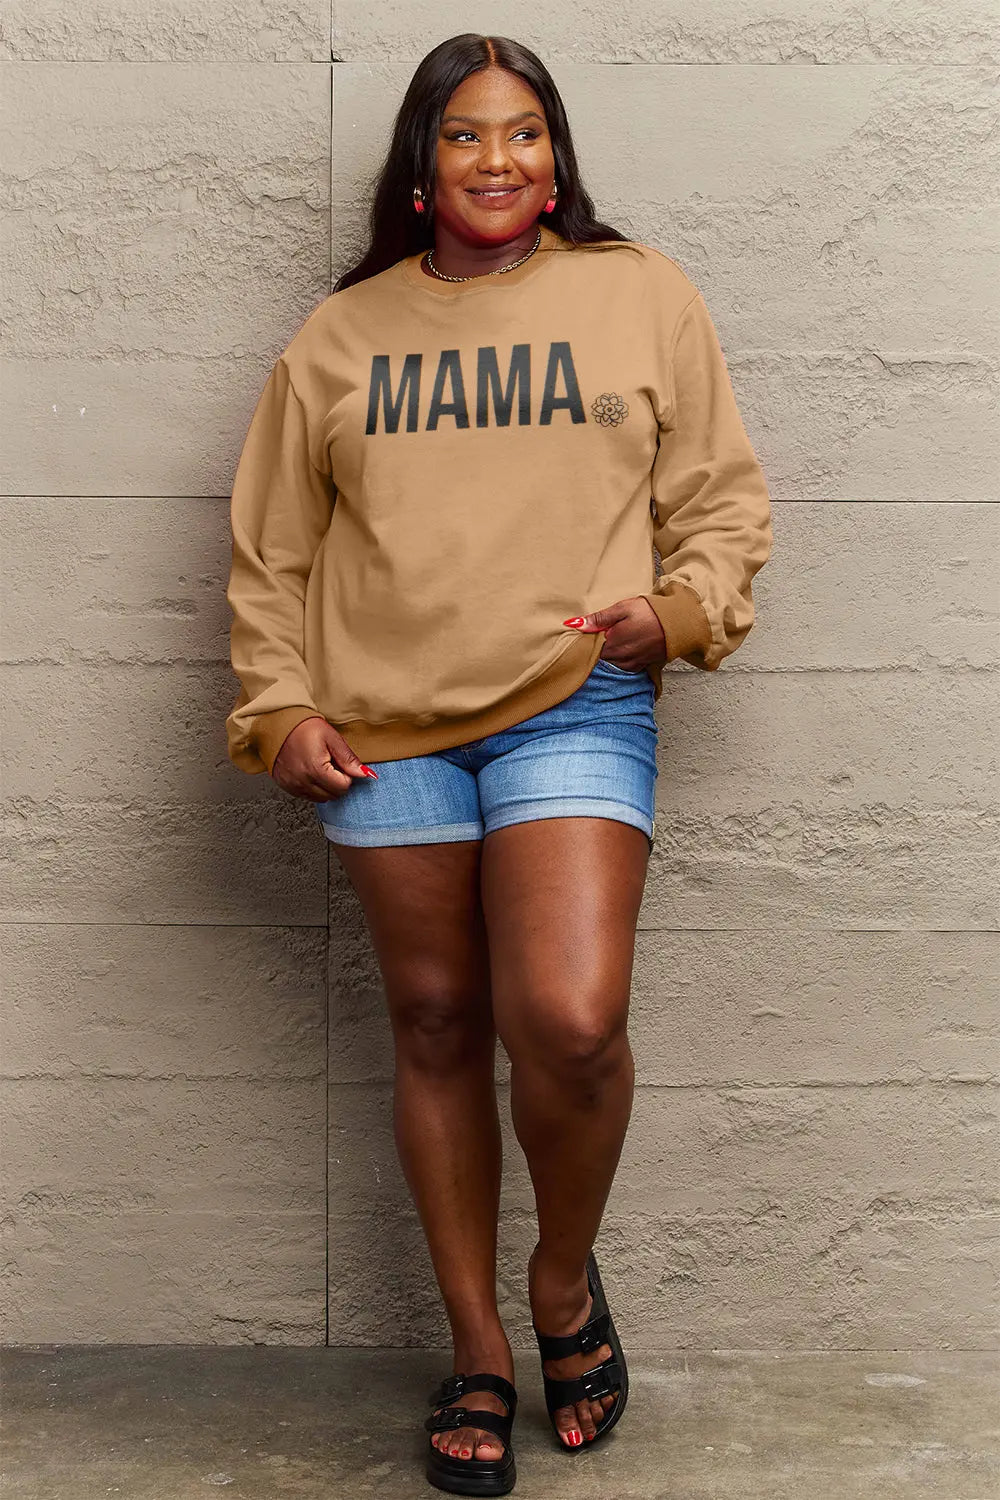 Simply Love Full Size MAMA Graphic Long Sleeve Sweatshirt Trendsi